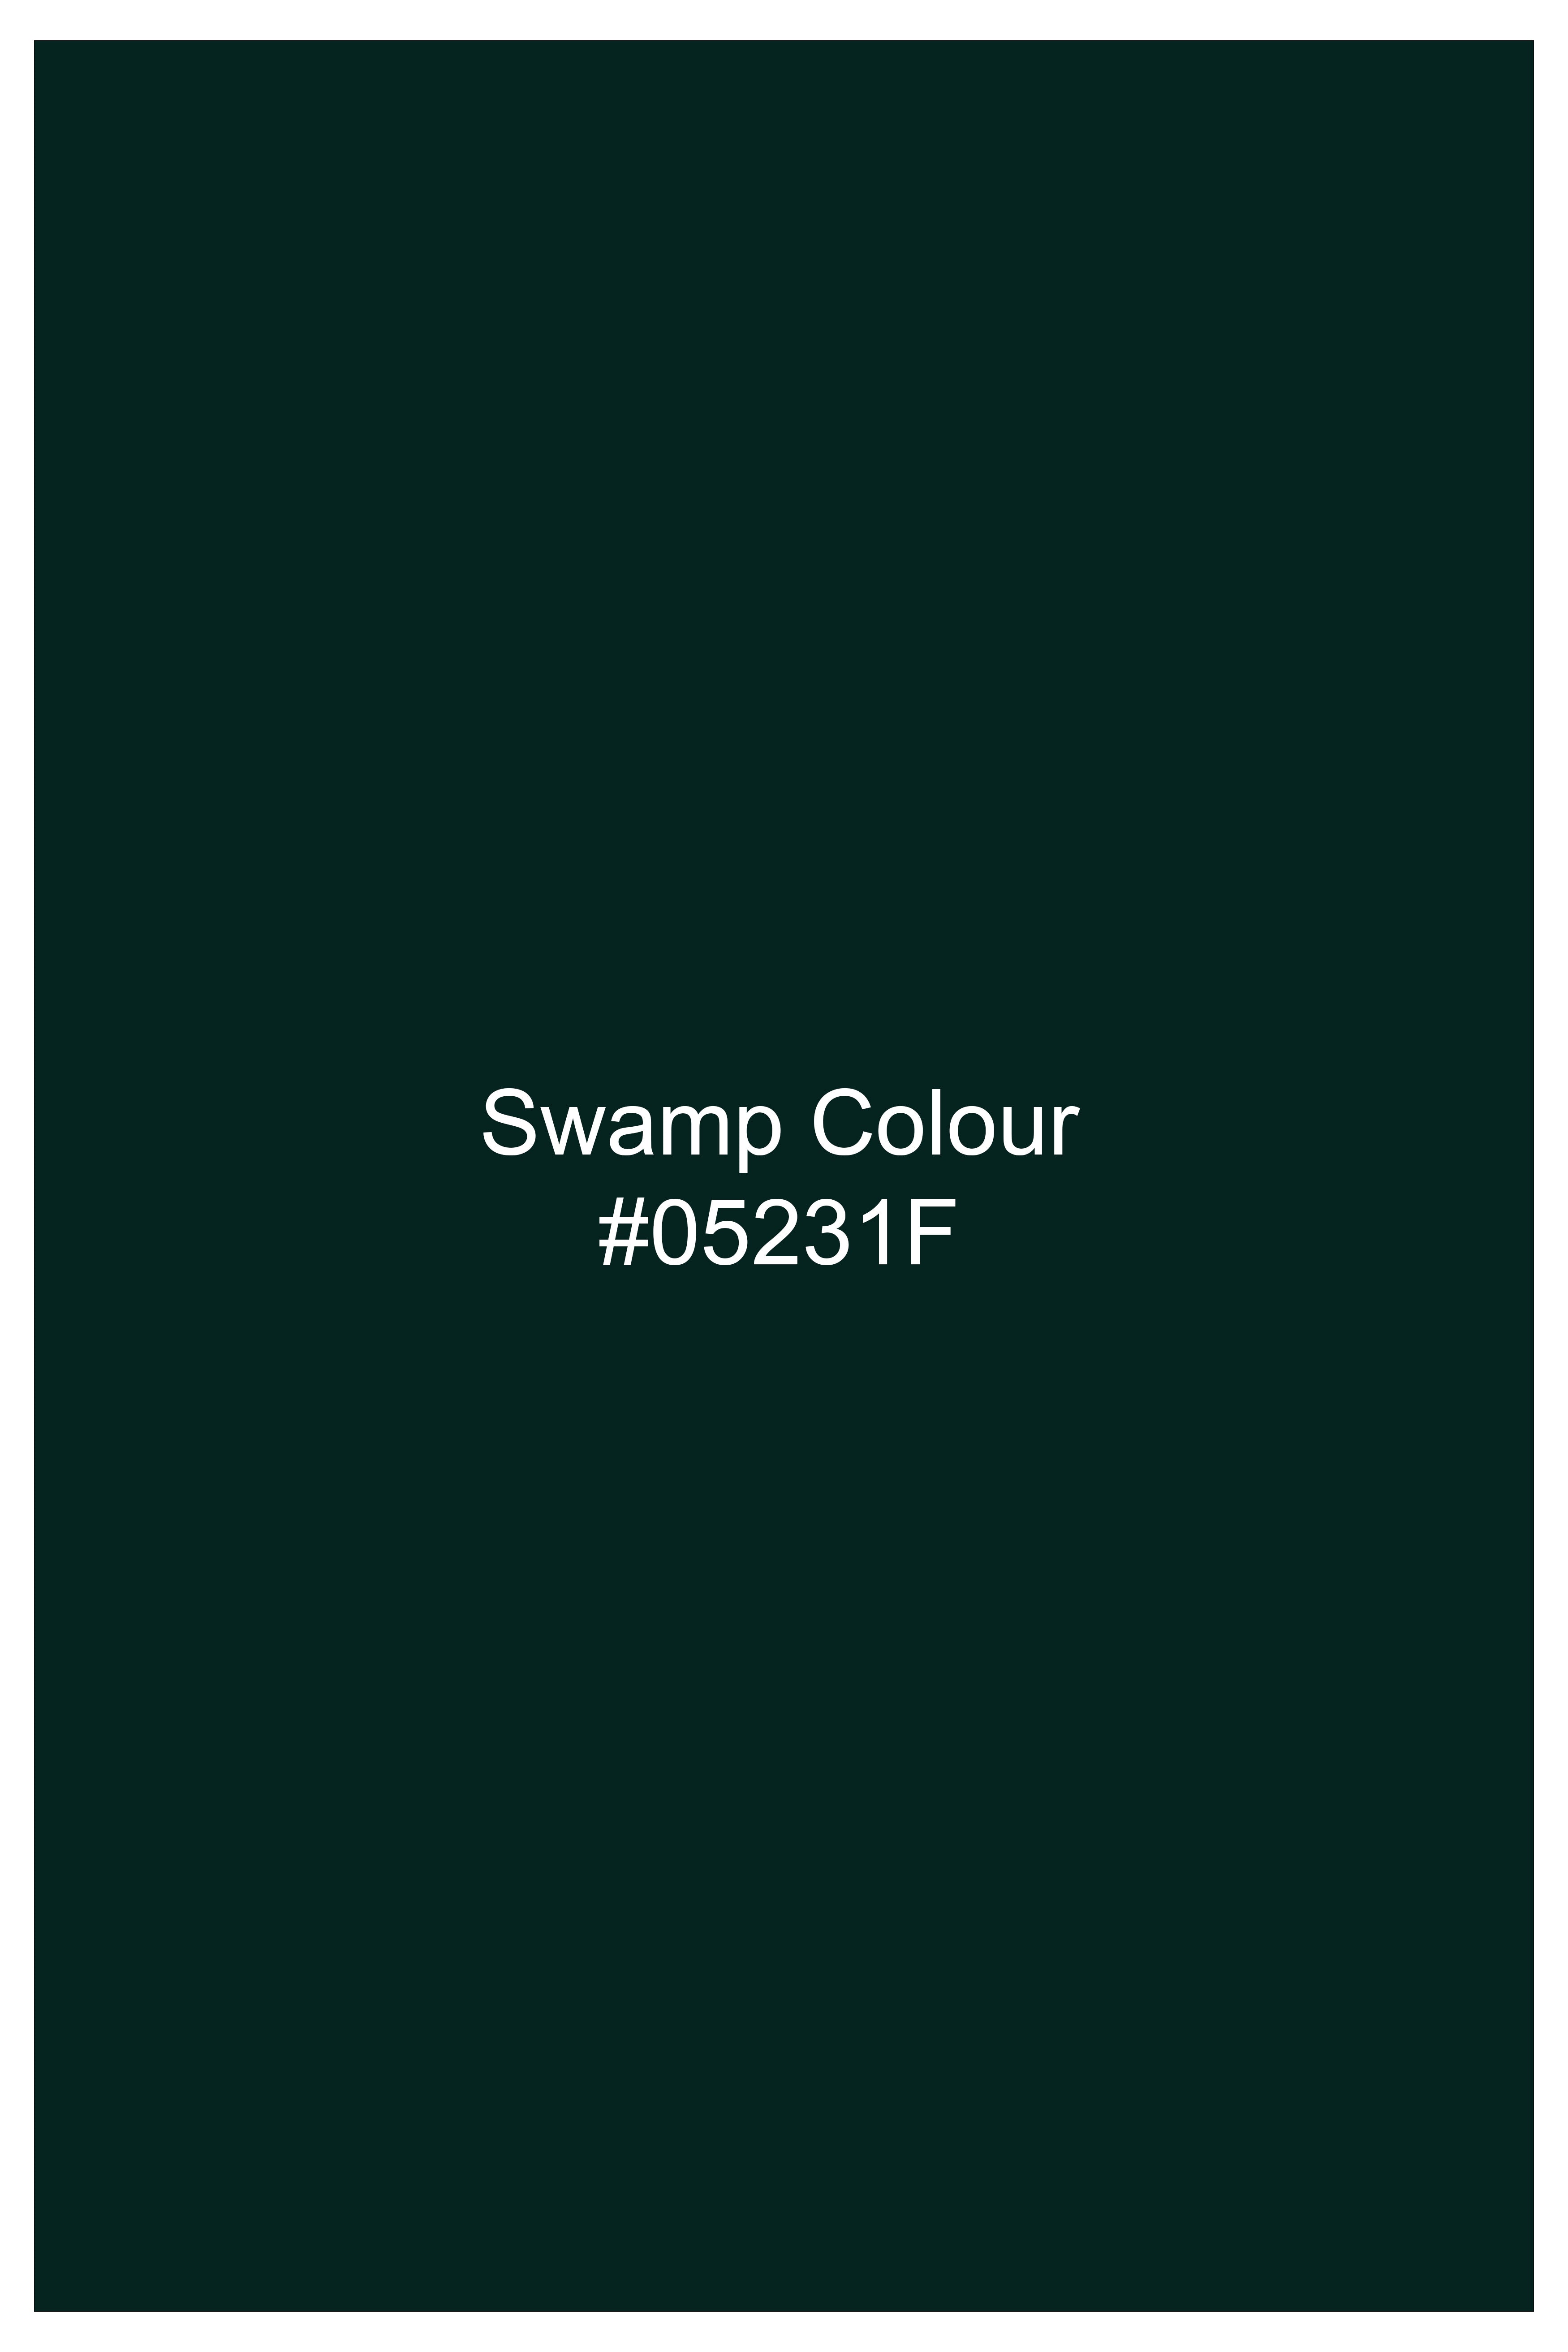 Swamp Green Striped Wool Blend Pant